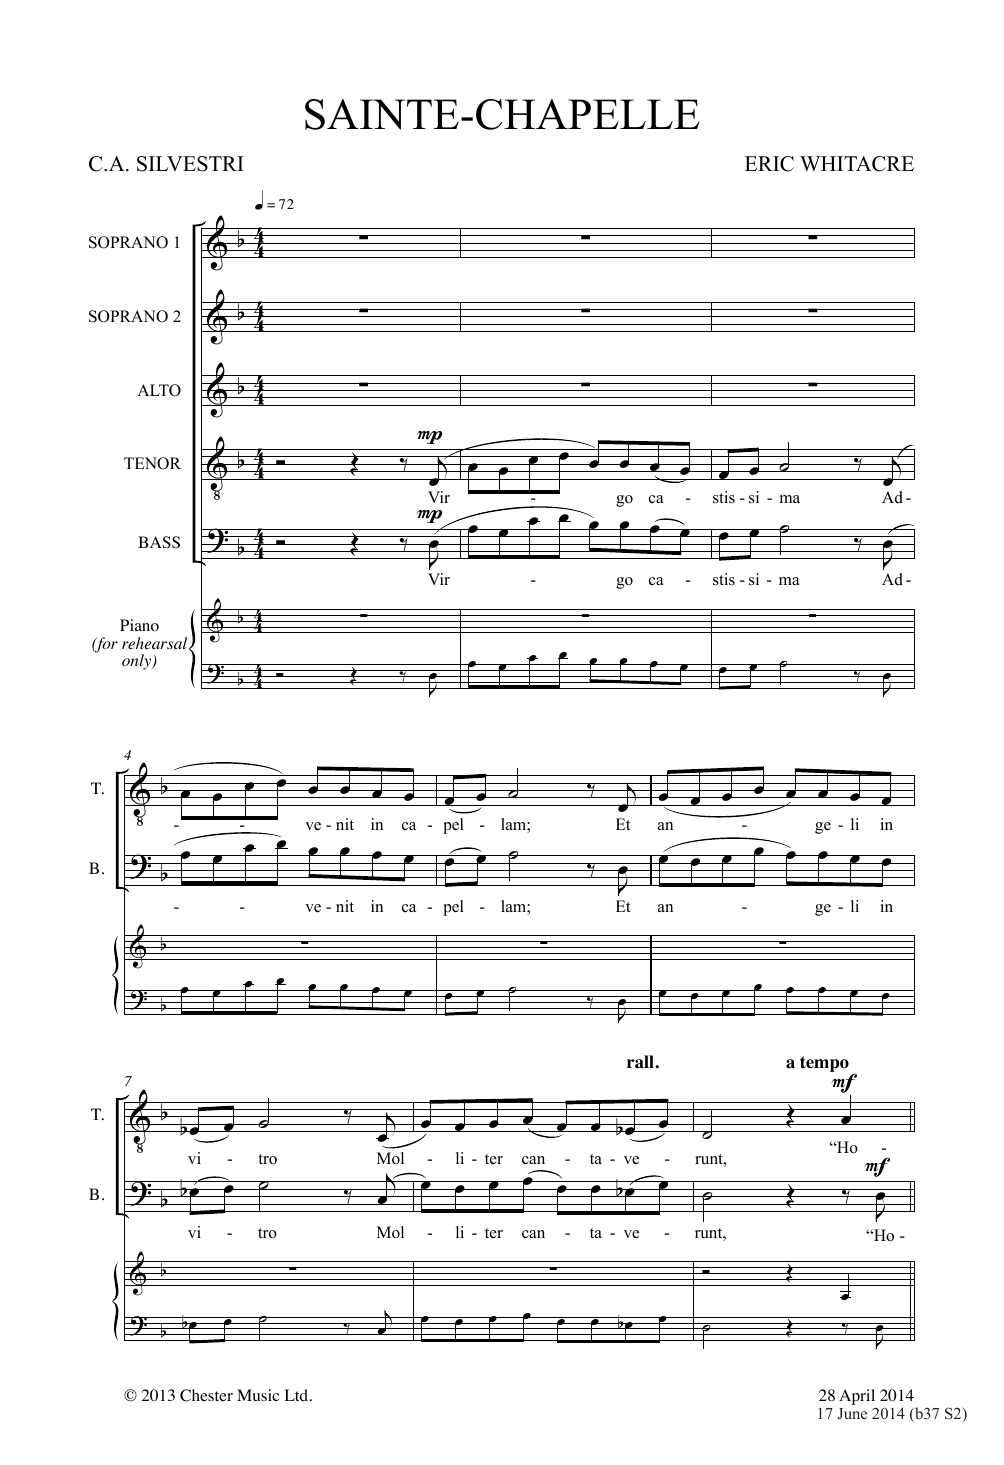 Download Eric Whitacre Sainte-Chapelle Sheet Music